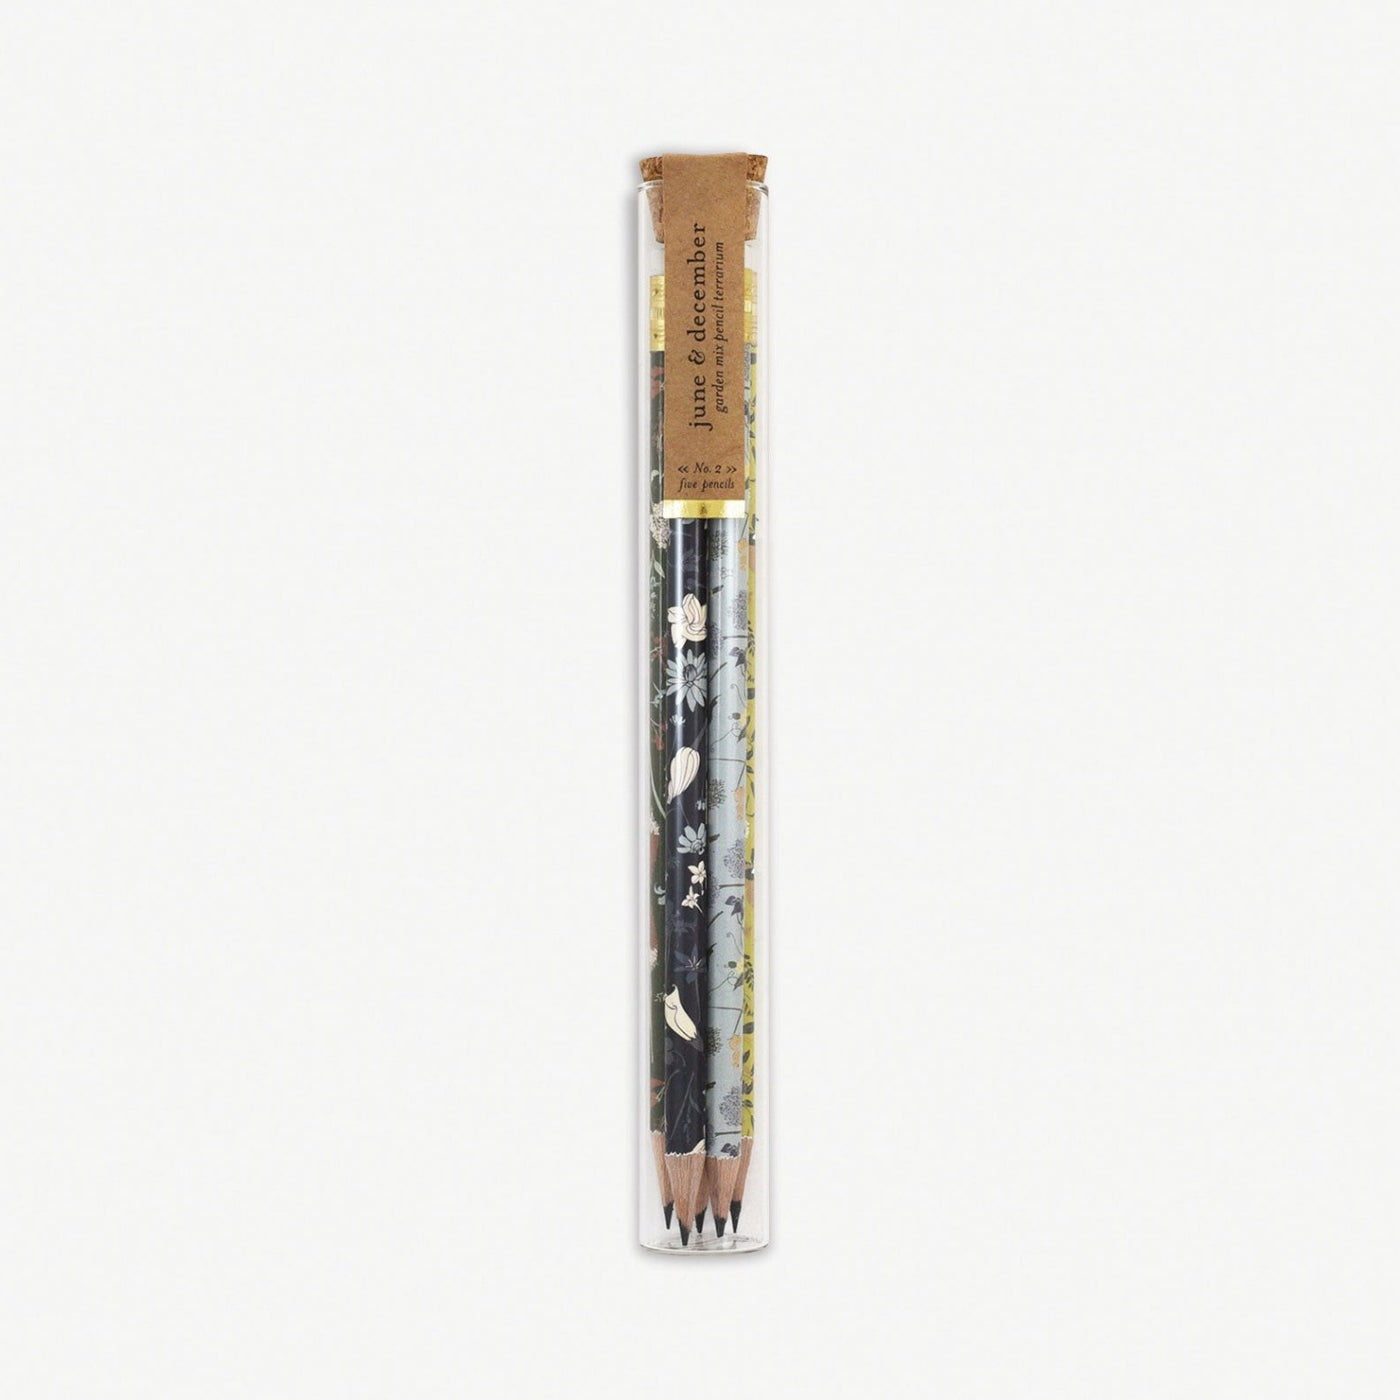 Garden Mix Pencil Terrarium, set of 5 pencils - June & December